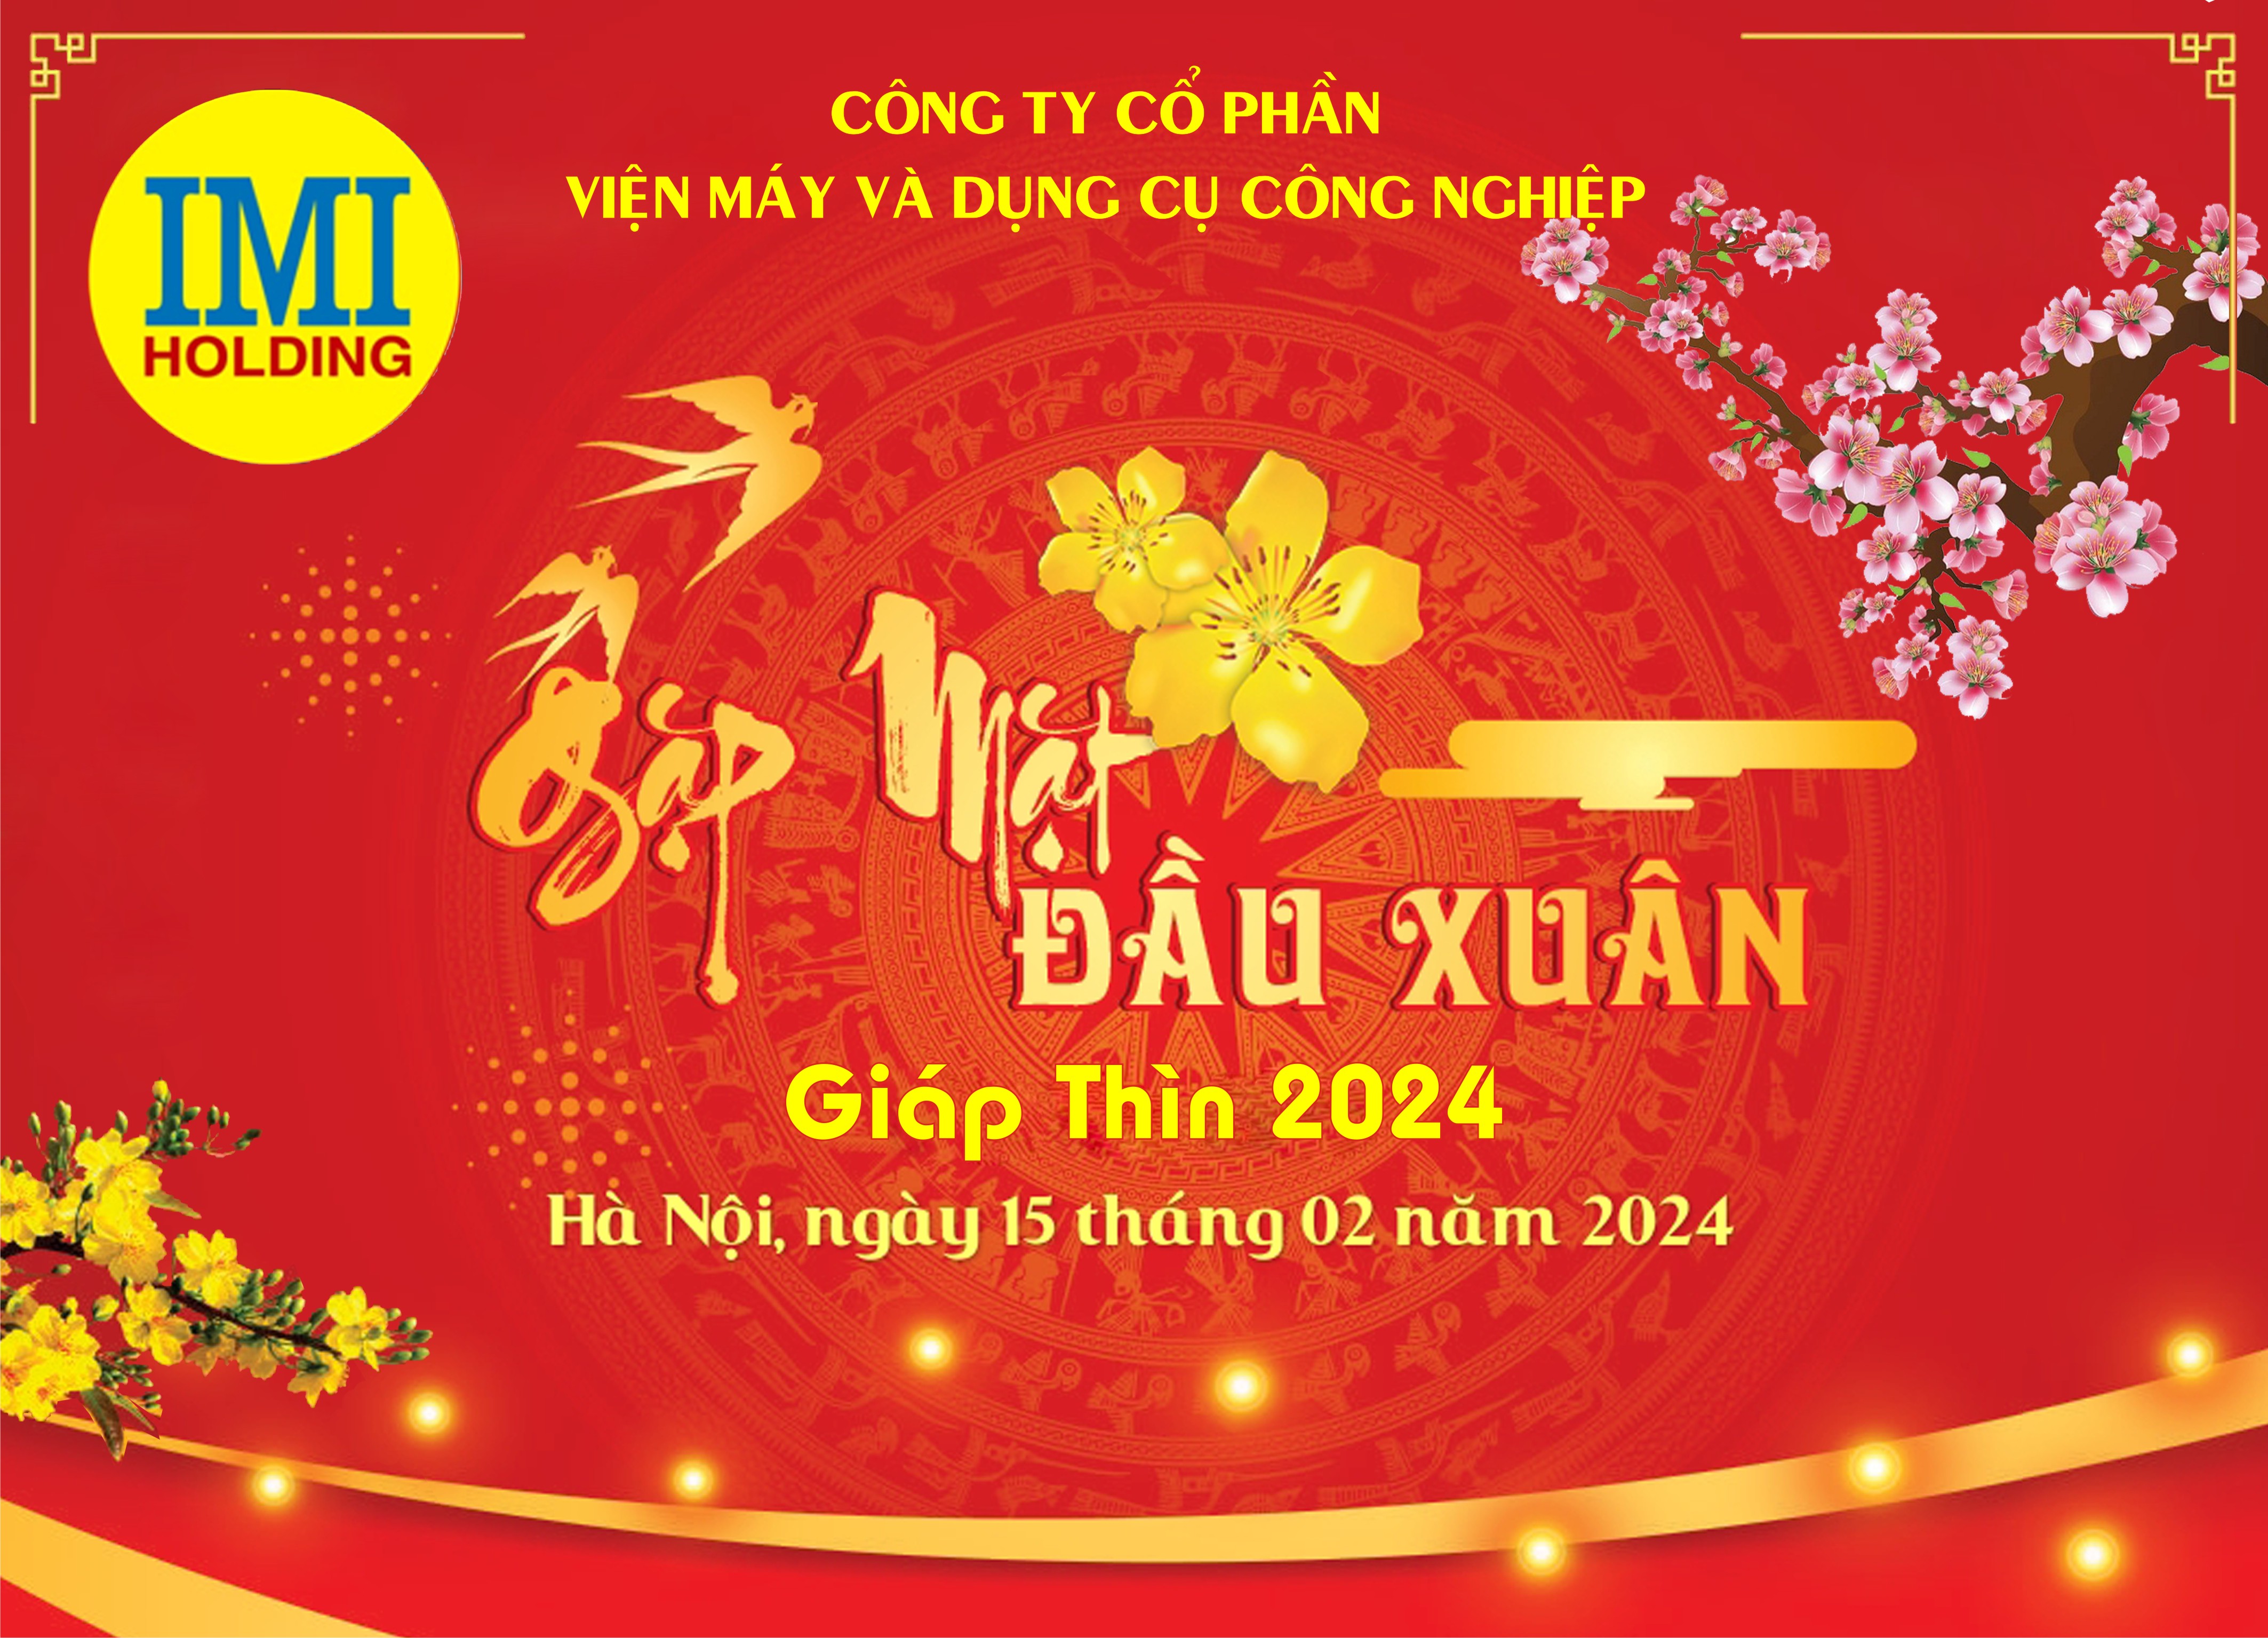 [Banner] Xuan GiapThin 2024 IMI